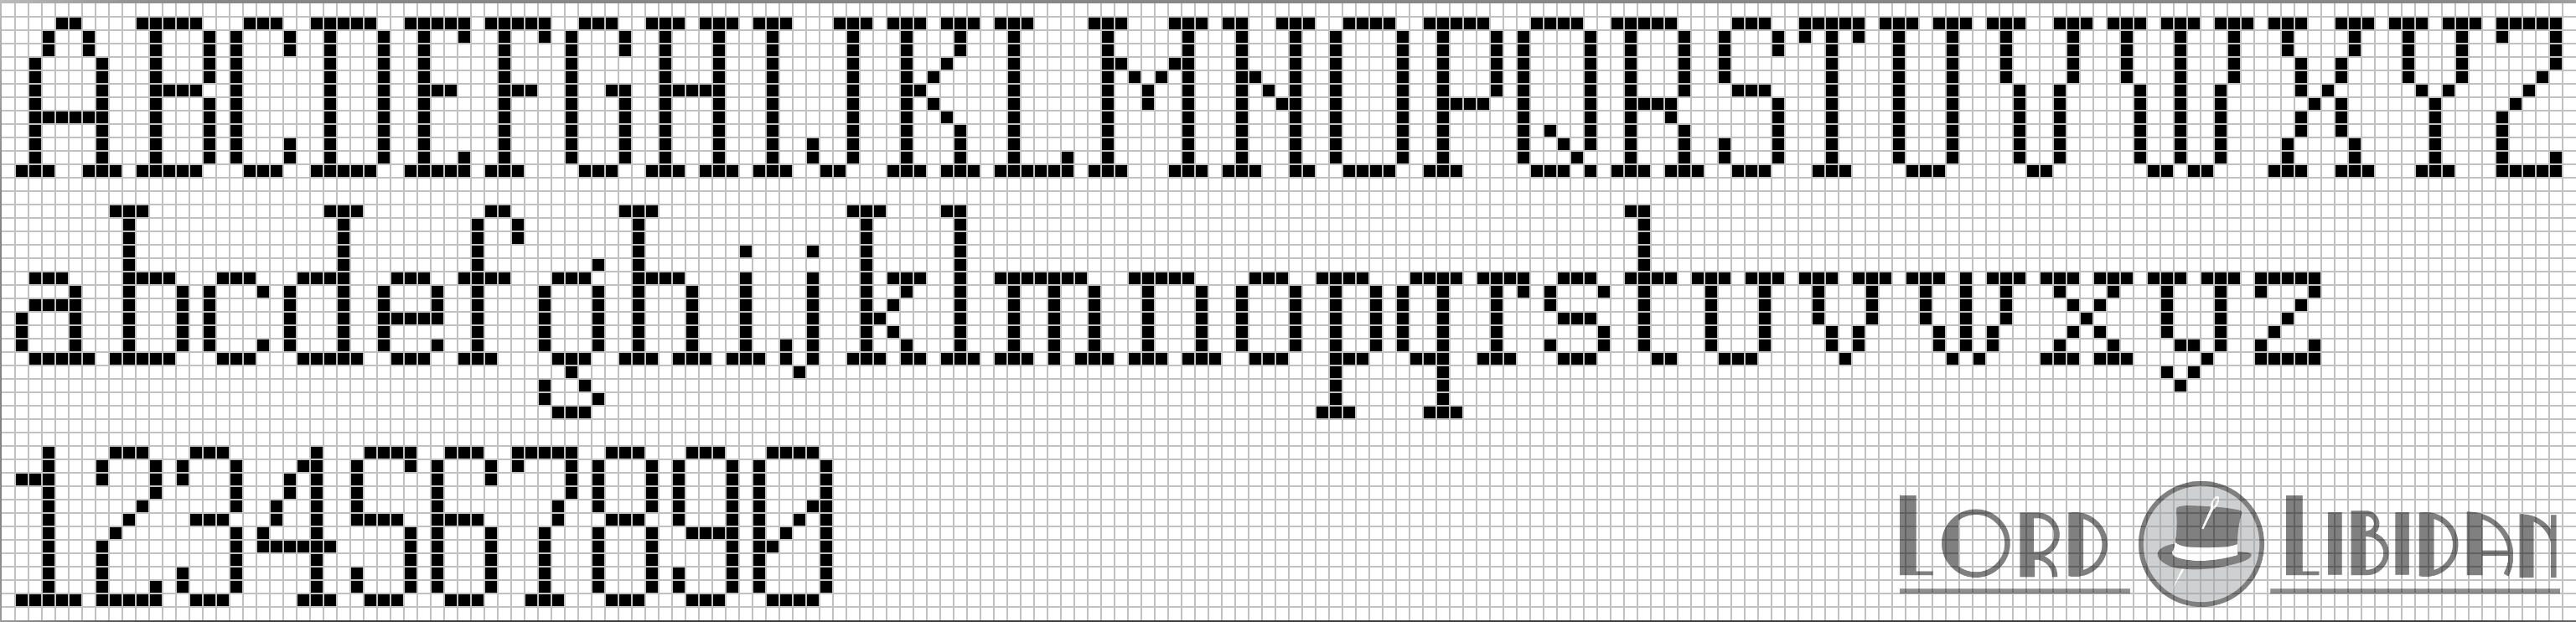 Typeface Cross Stitch Alphabet Pattern Free Download by Lord Libidan